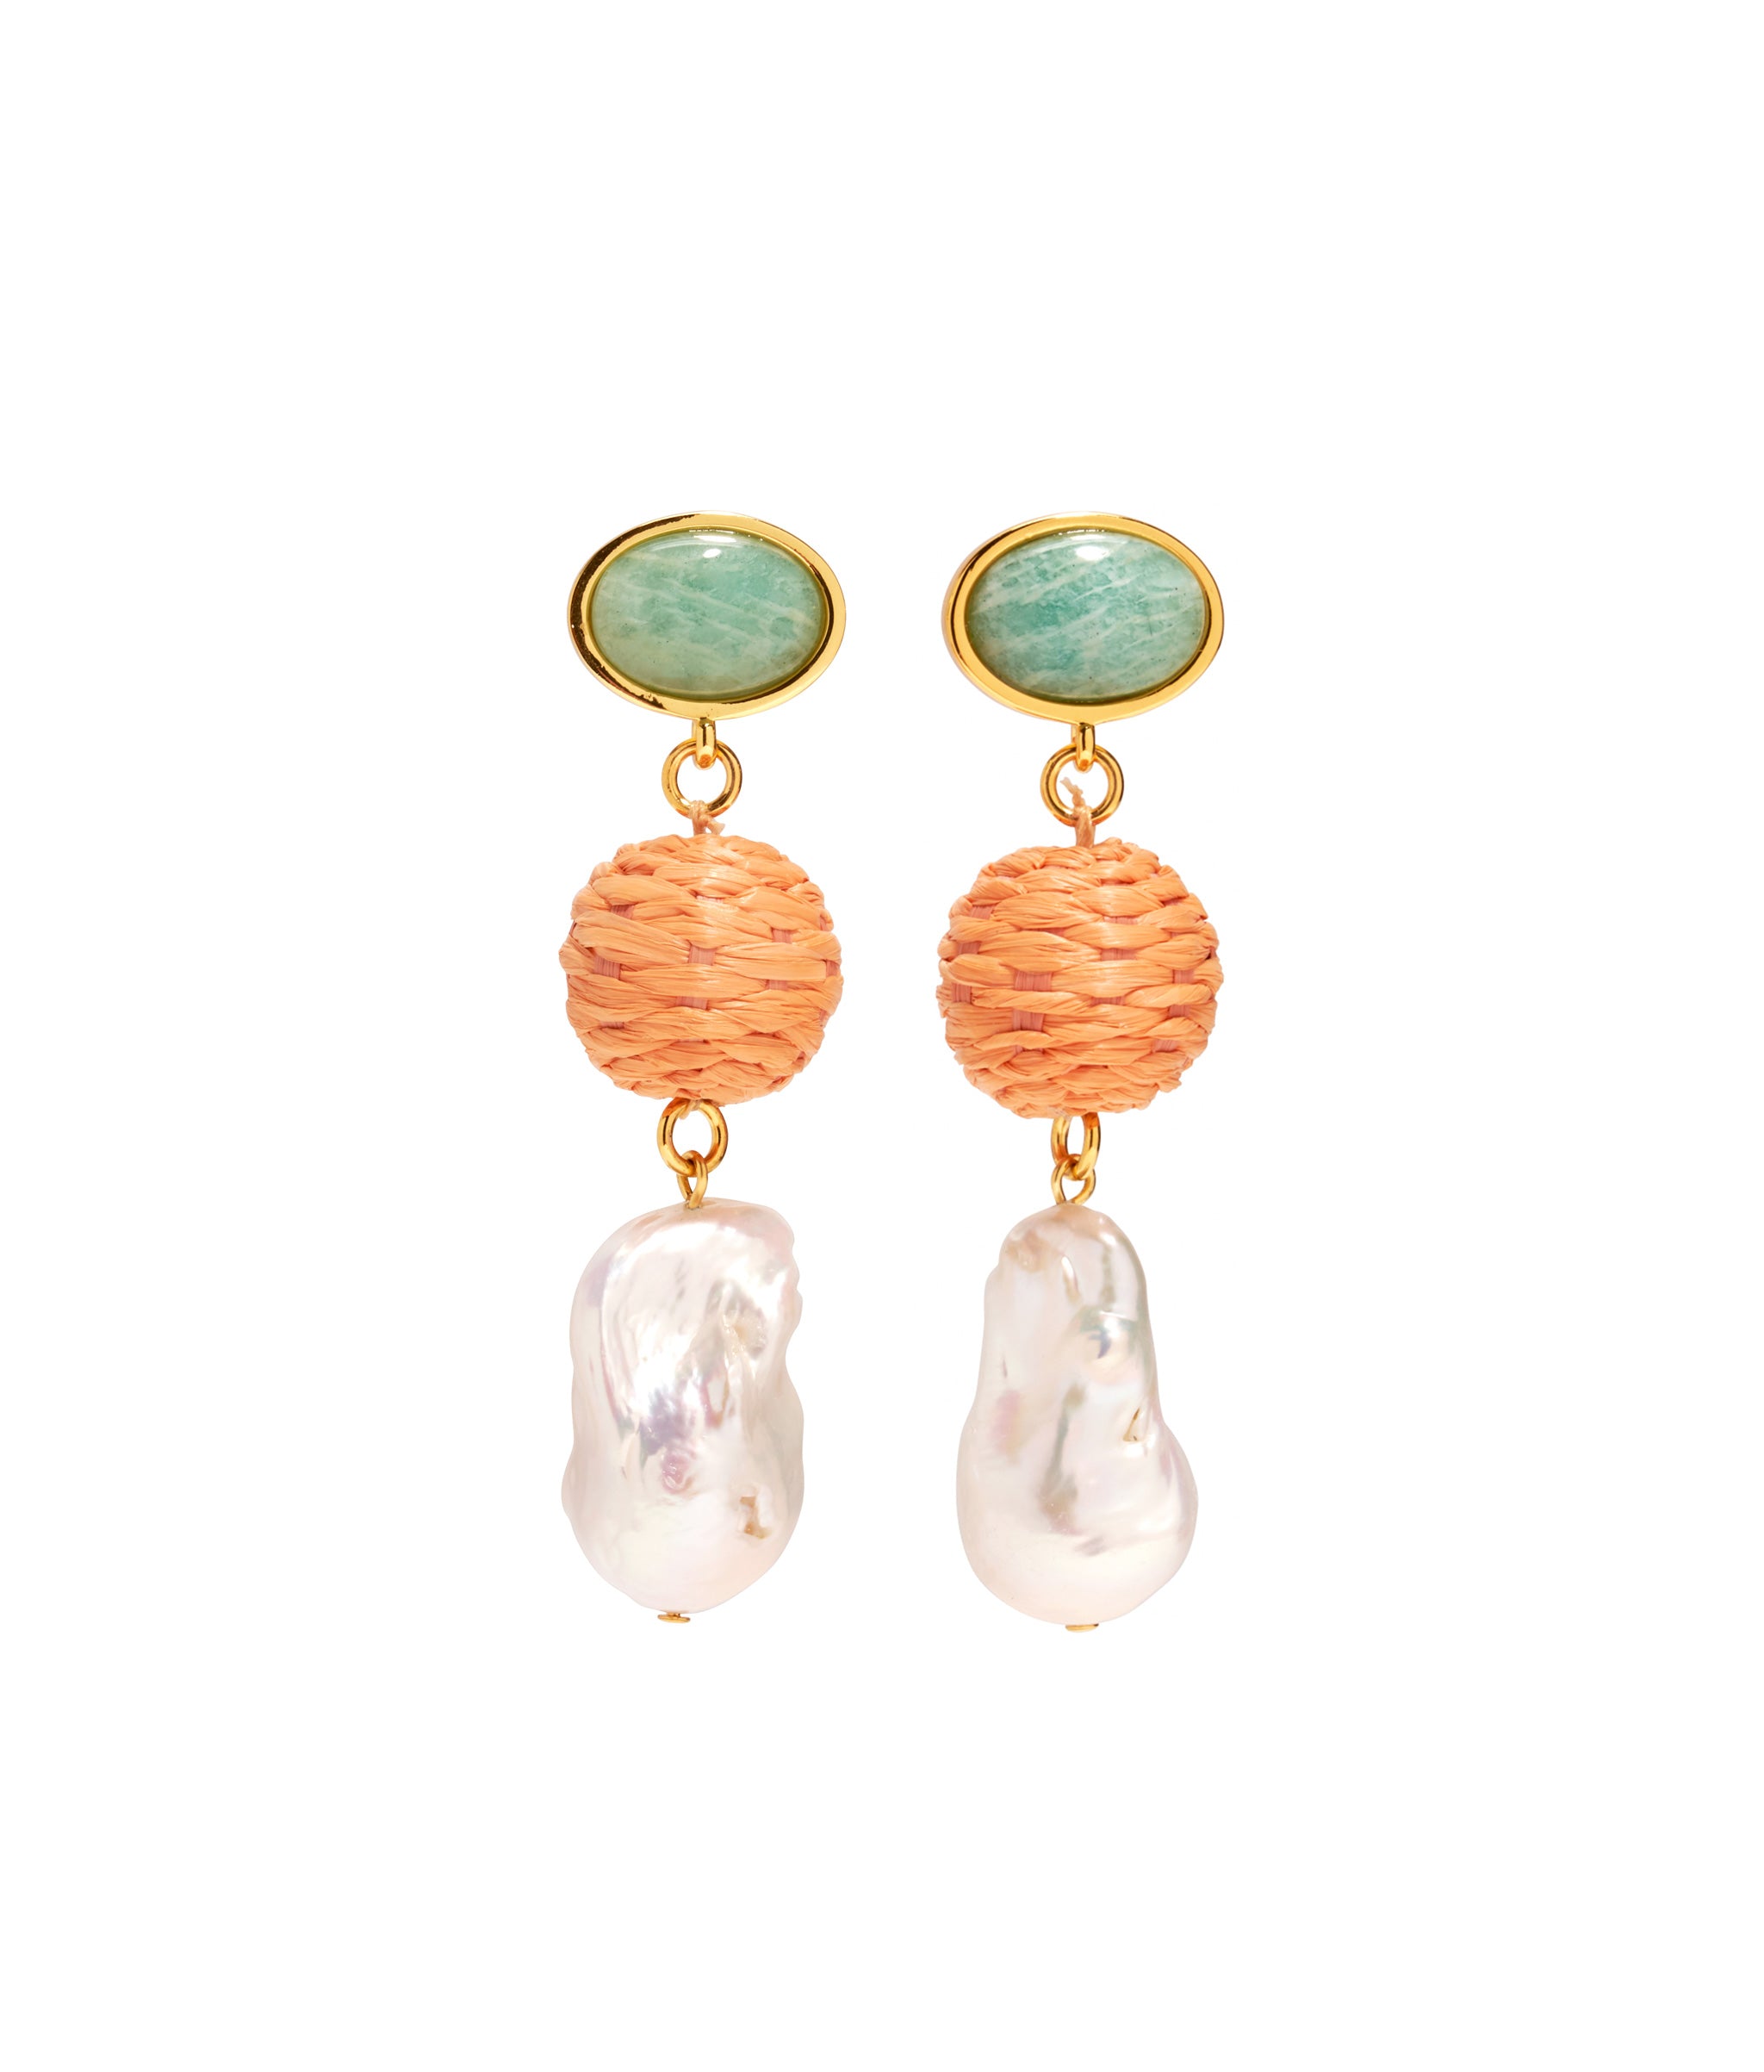 Mandarina Drop Earrings. Gold-plated brass earrings with amazonite stone tops, orange raffia, freshwater pearl drops.